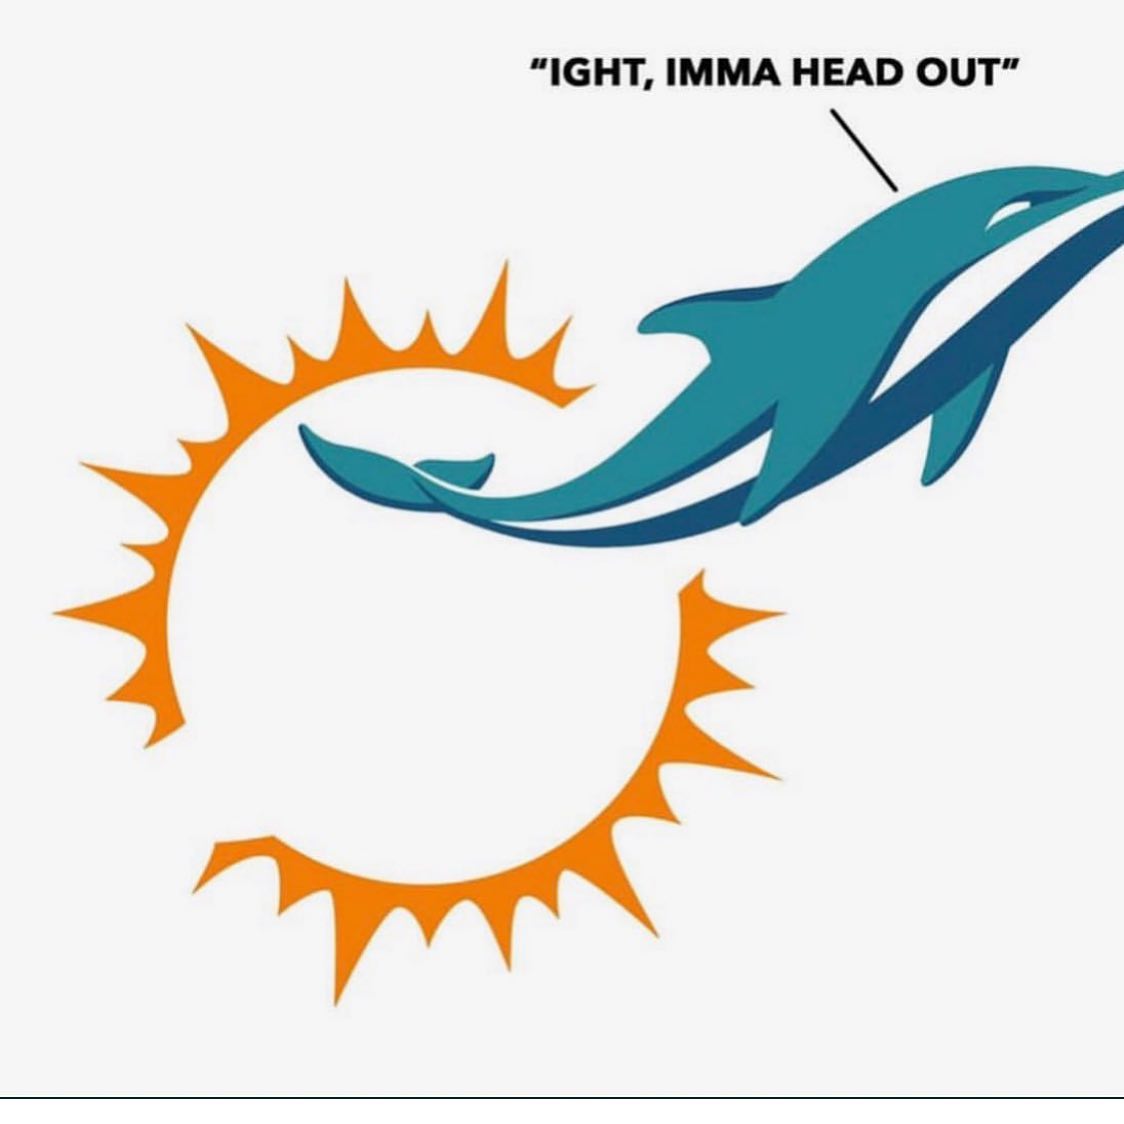 ight ima head out - miami dolphins logo 2020 - "Ight, Imma Head Out"